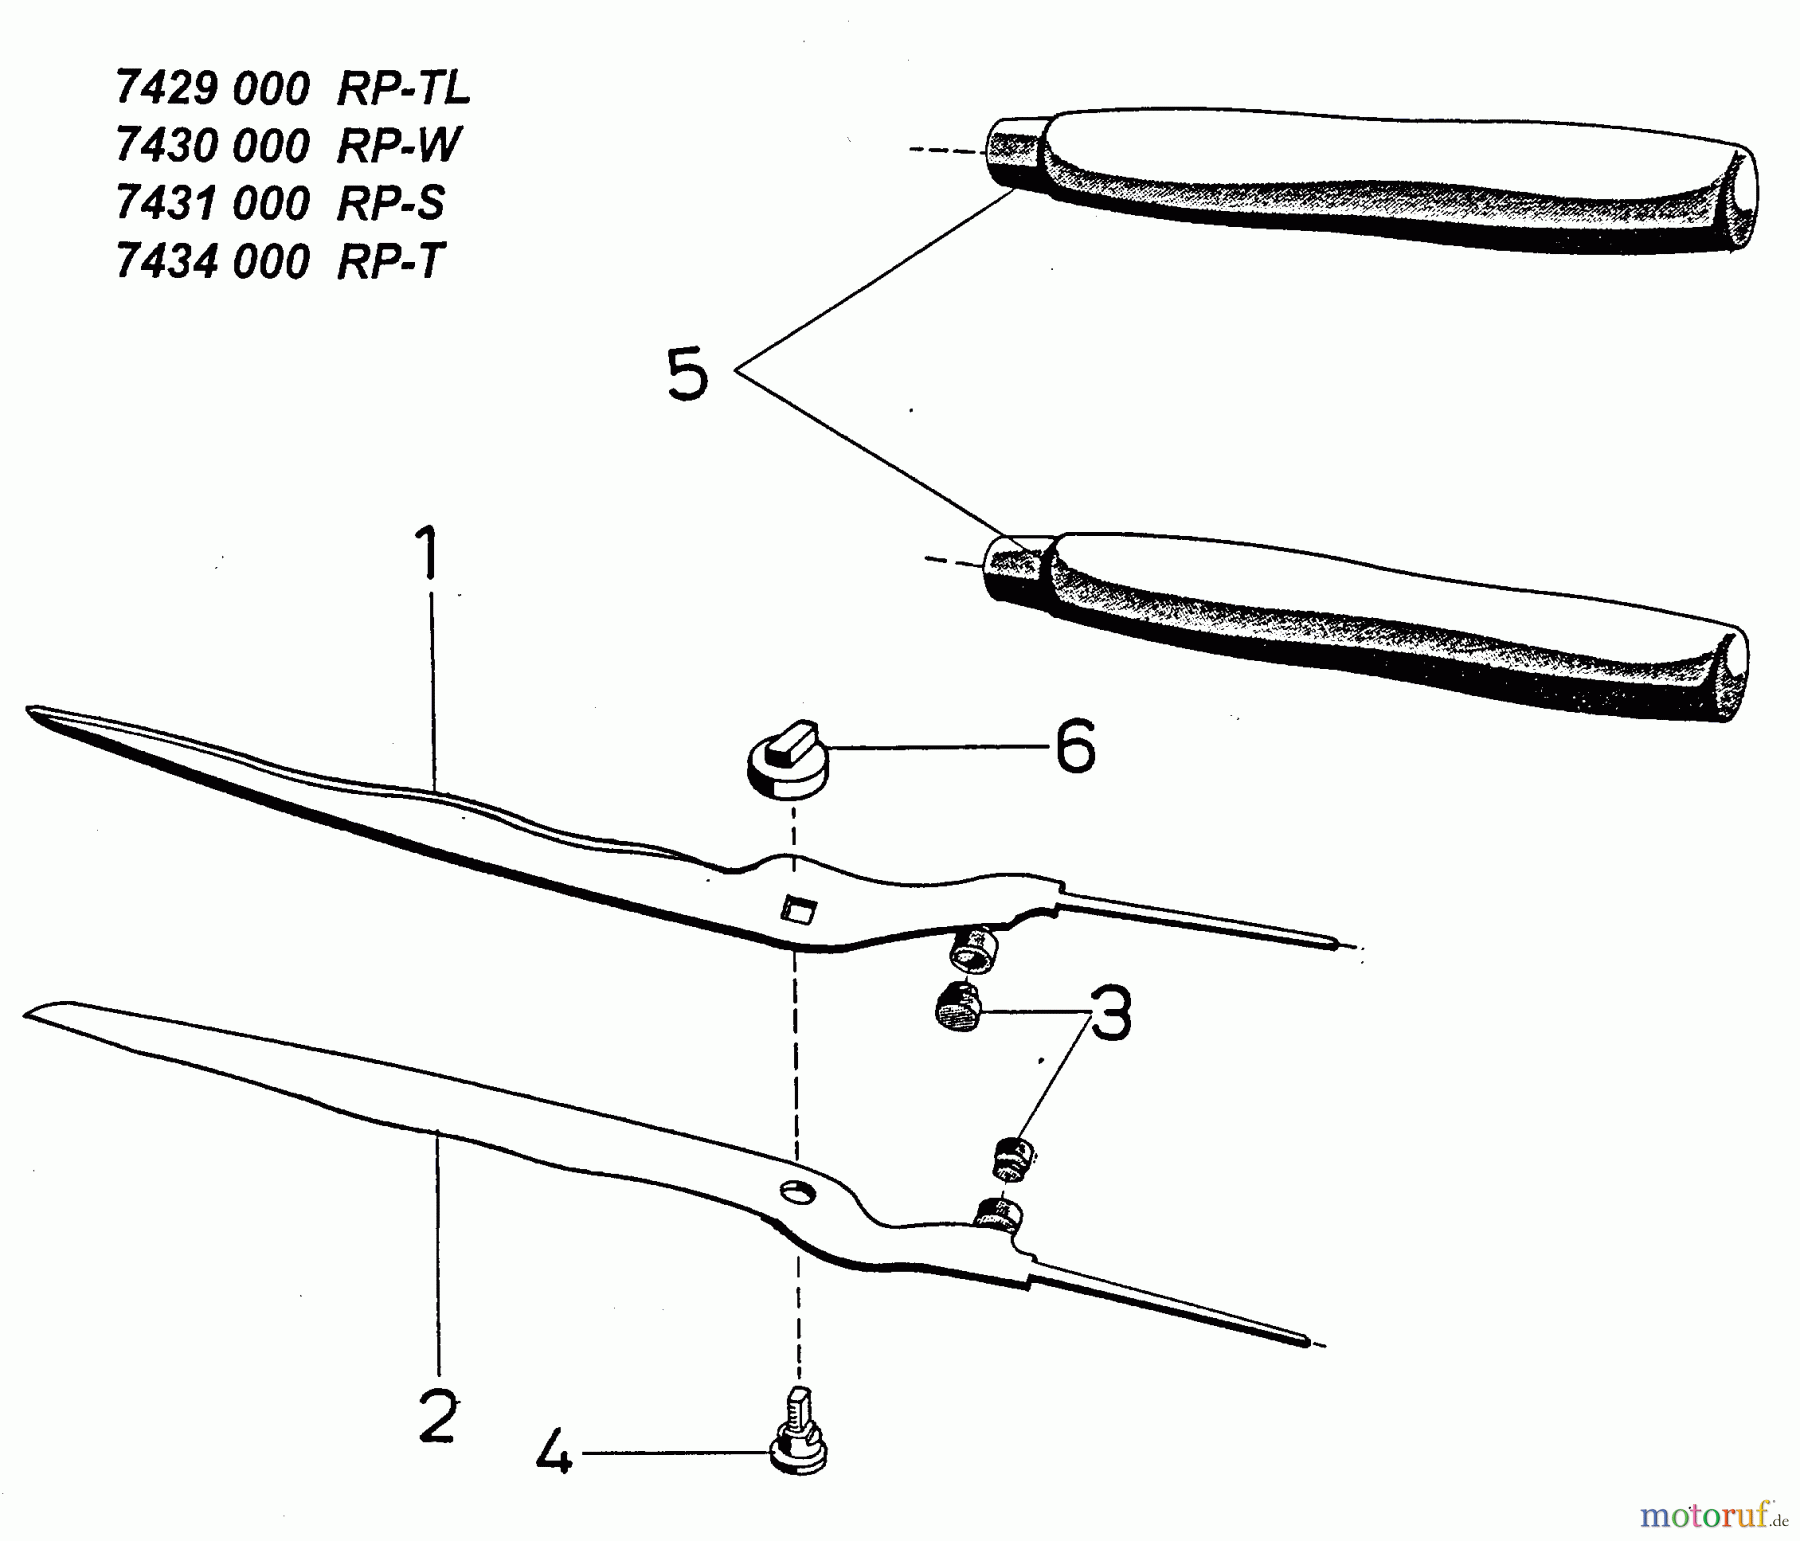  Wolf-Garten Hedge shears RP-S 7431000  (1998) Basic machine